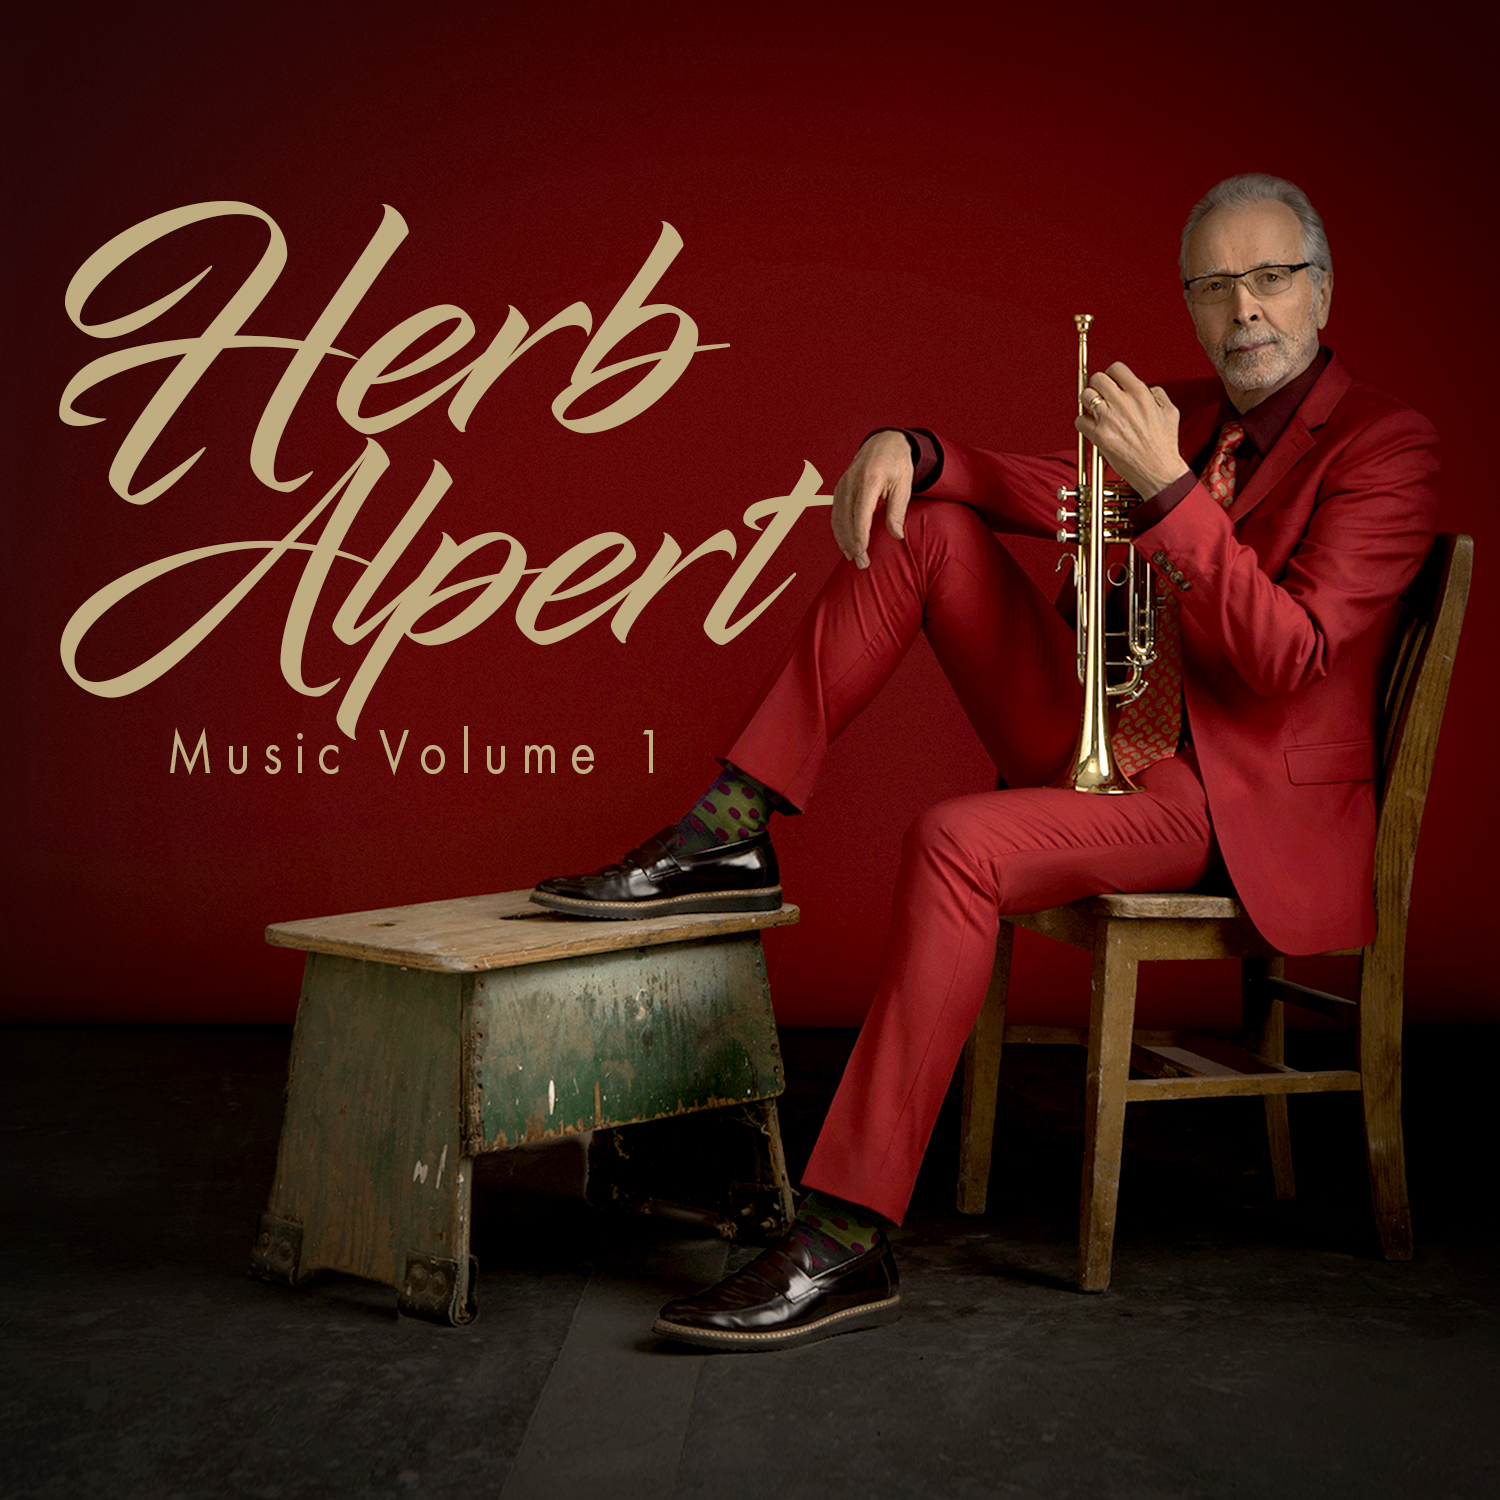 Herb Alpert Music Volume 1